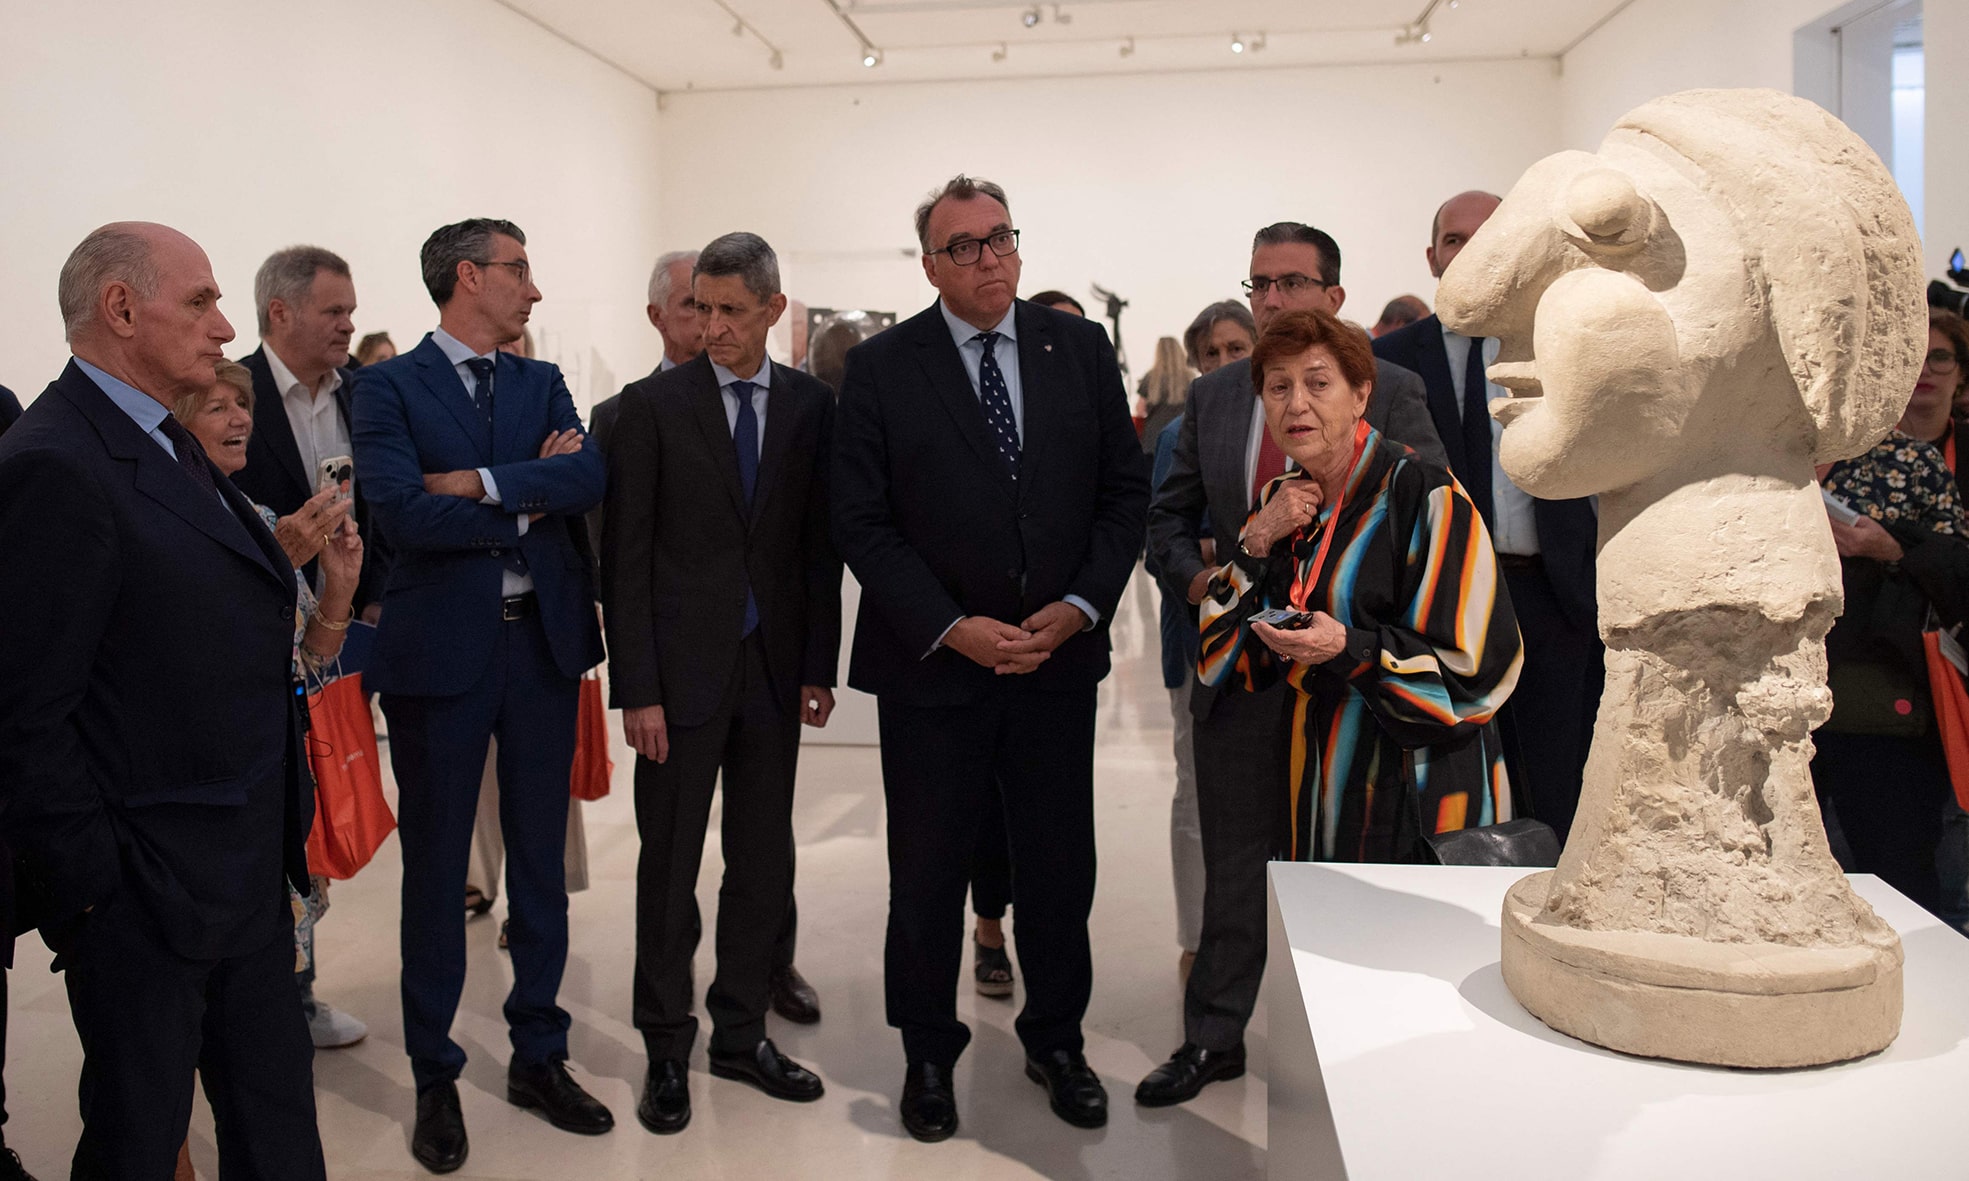 Grand-son of Pablo Picasso, Bernard Ruiz-Picasso (left) and Art Curator Carmen Gimenez, pose during the inauguration of the “Picasso Escultor.